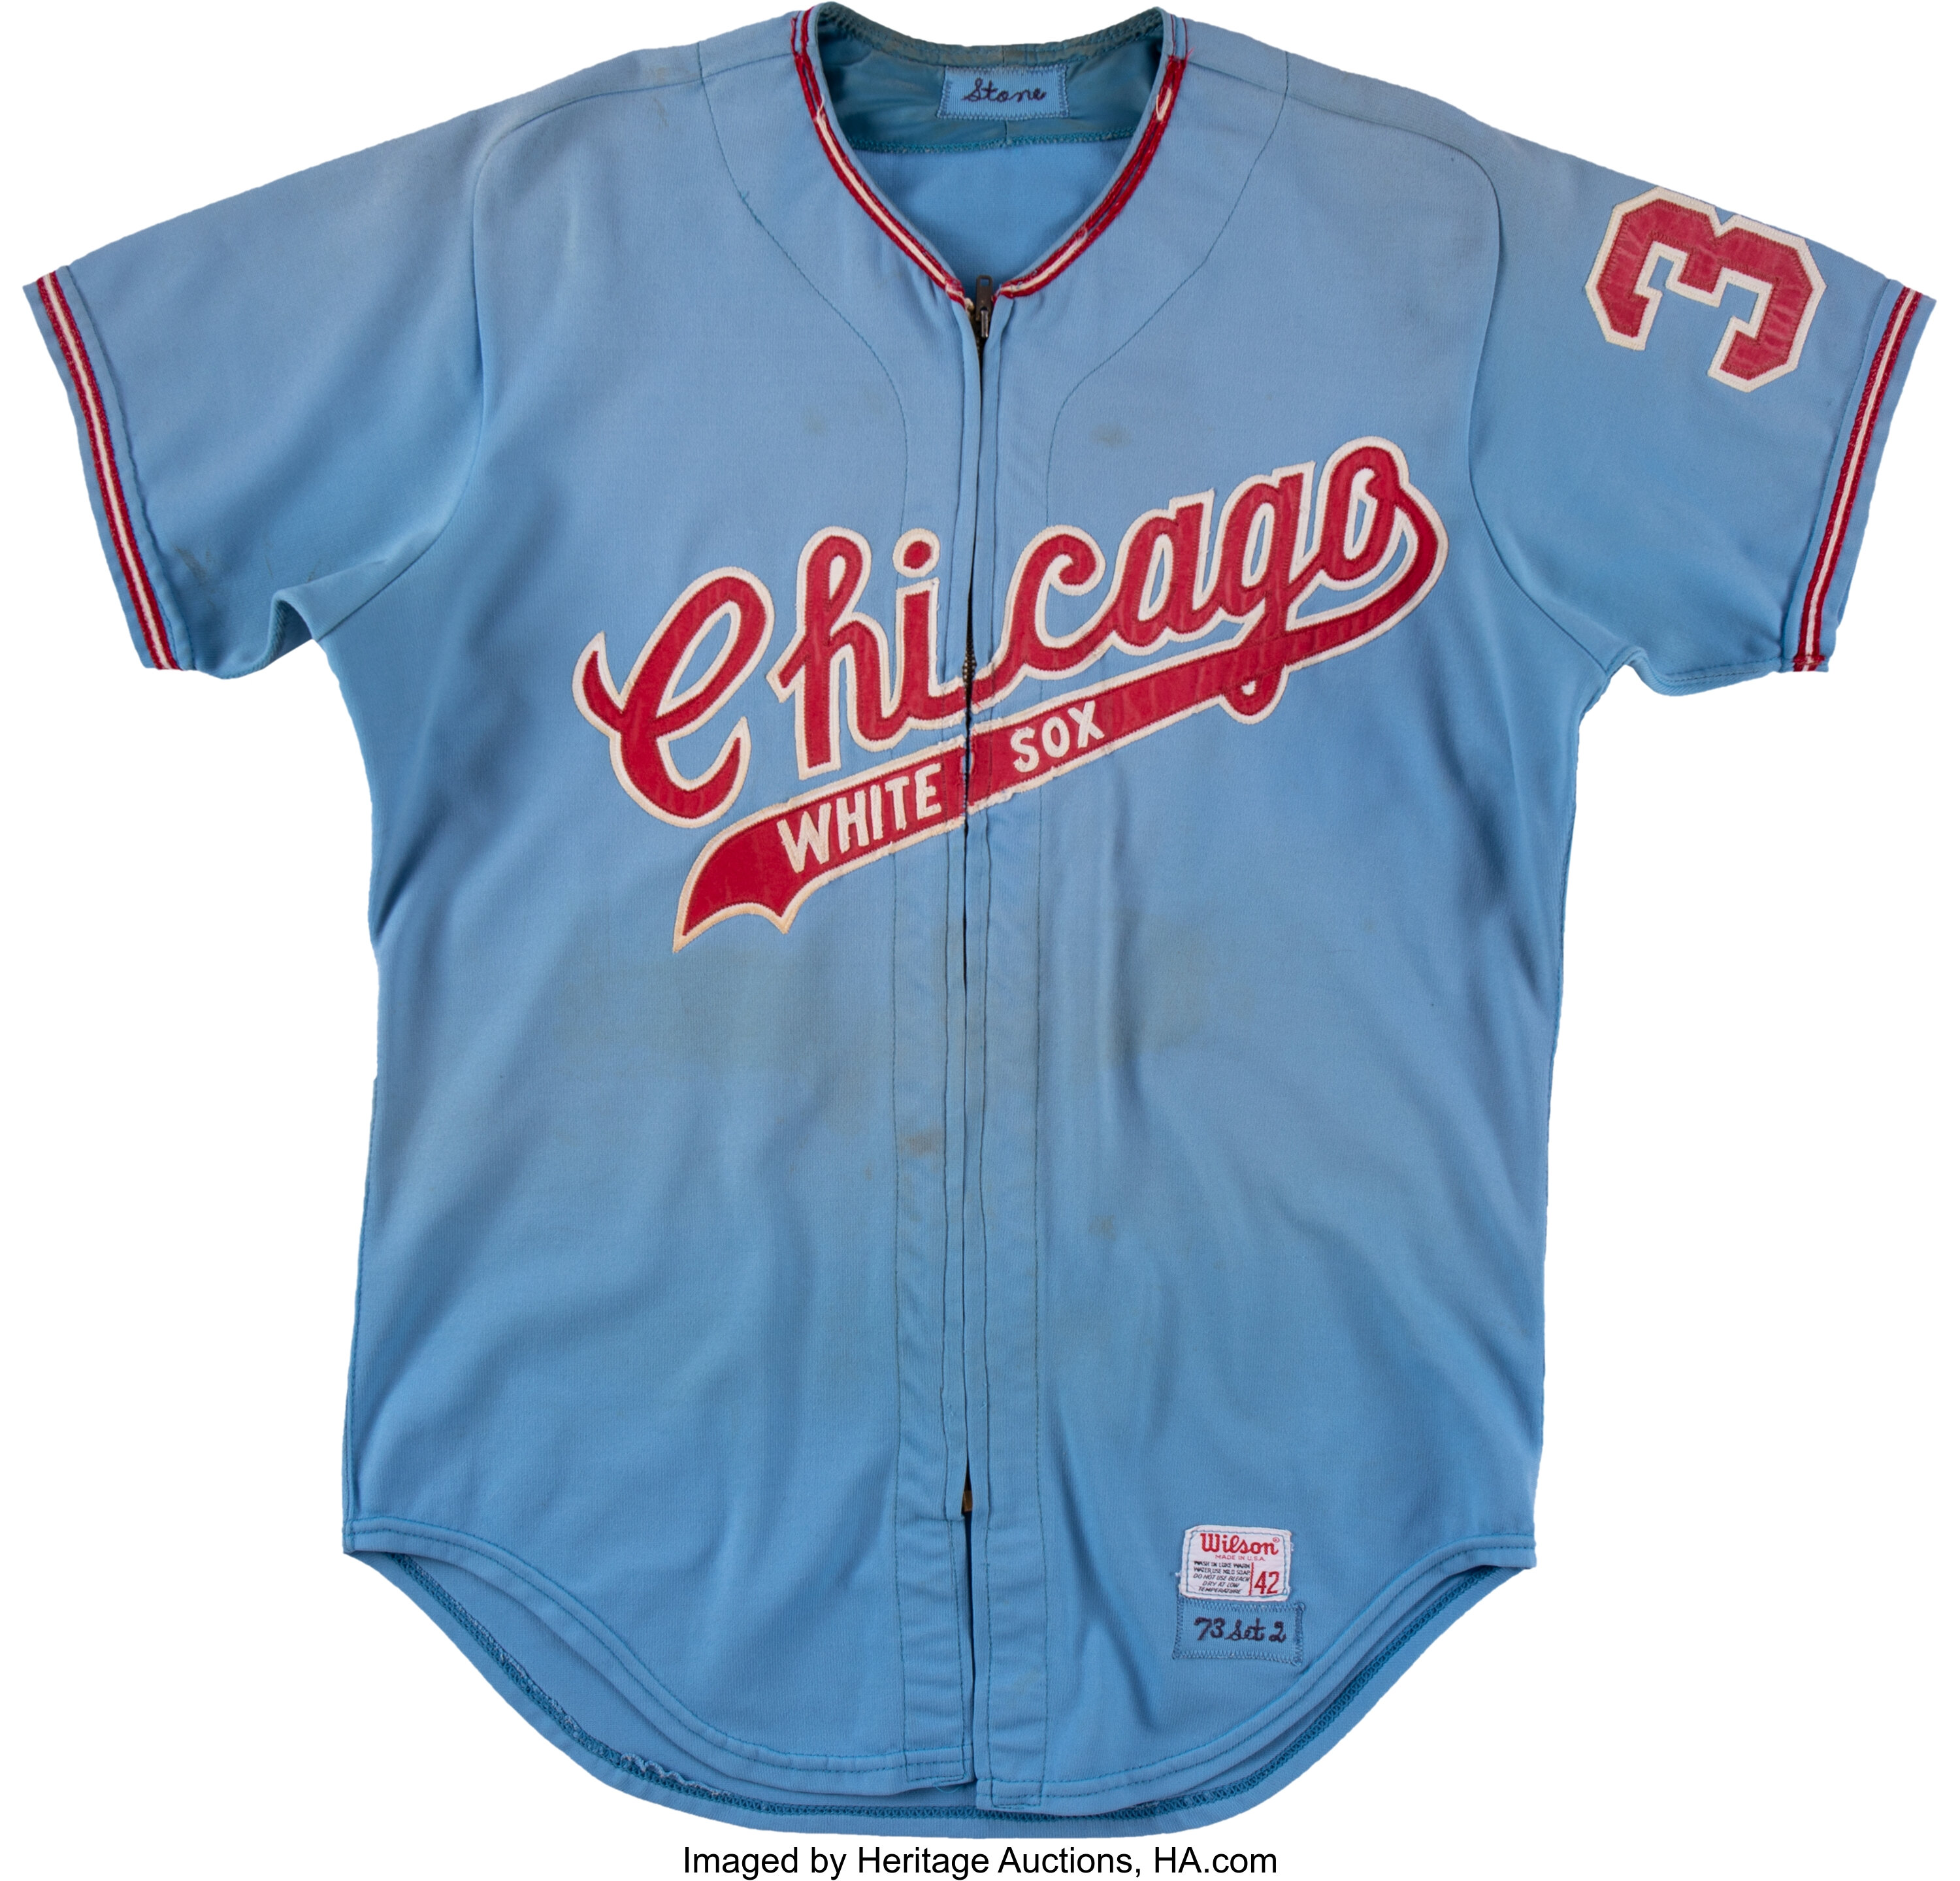 Chicago White Sox Jerseys, White Sox Baseball Jersey, Uniforms